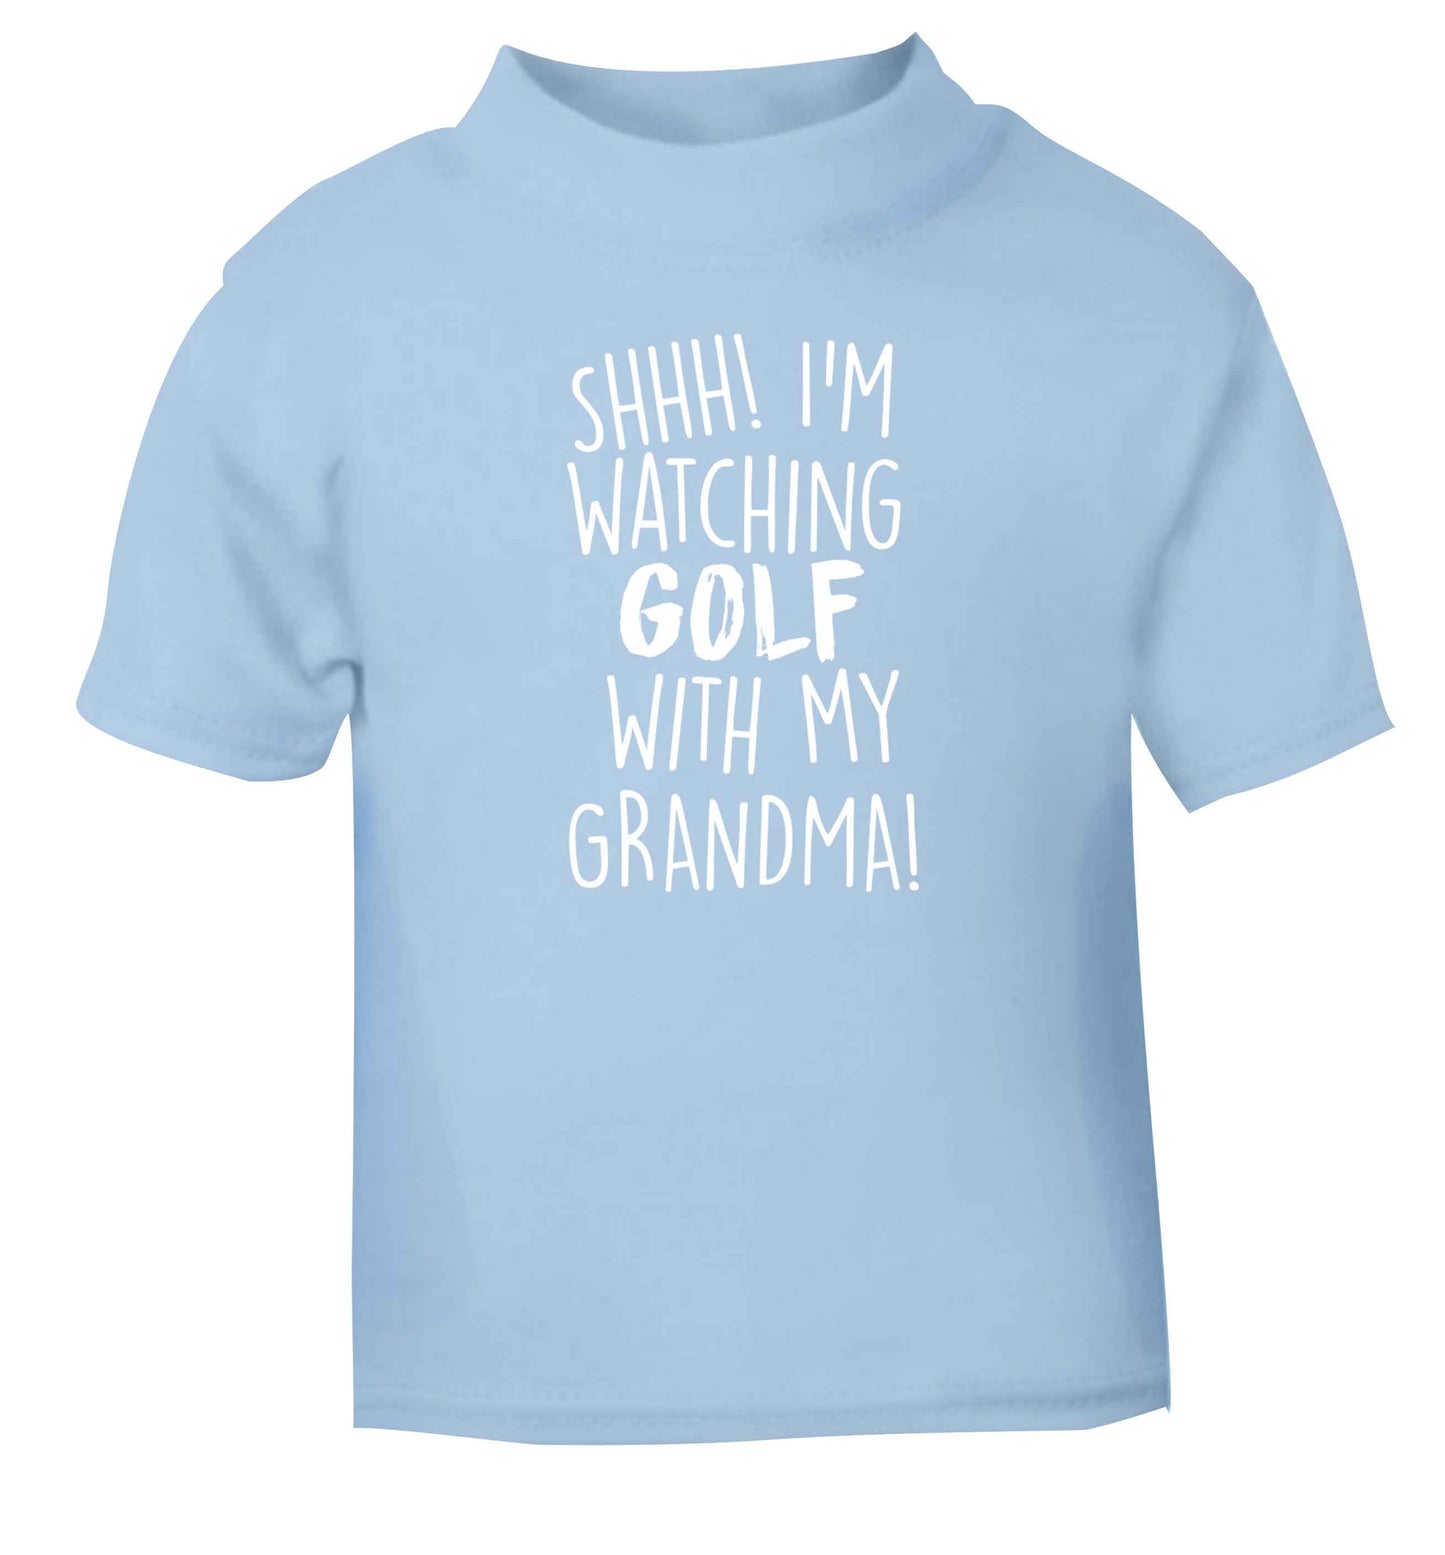 Shh I'm watching golf with my grandma light blue Baby Toddler Tshirt 2 Years